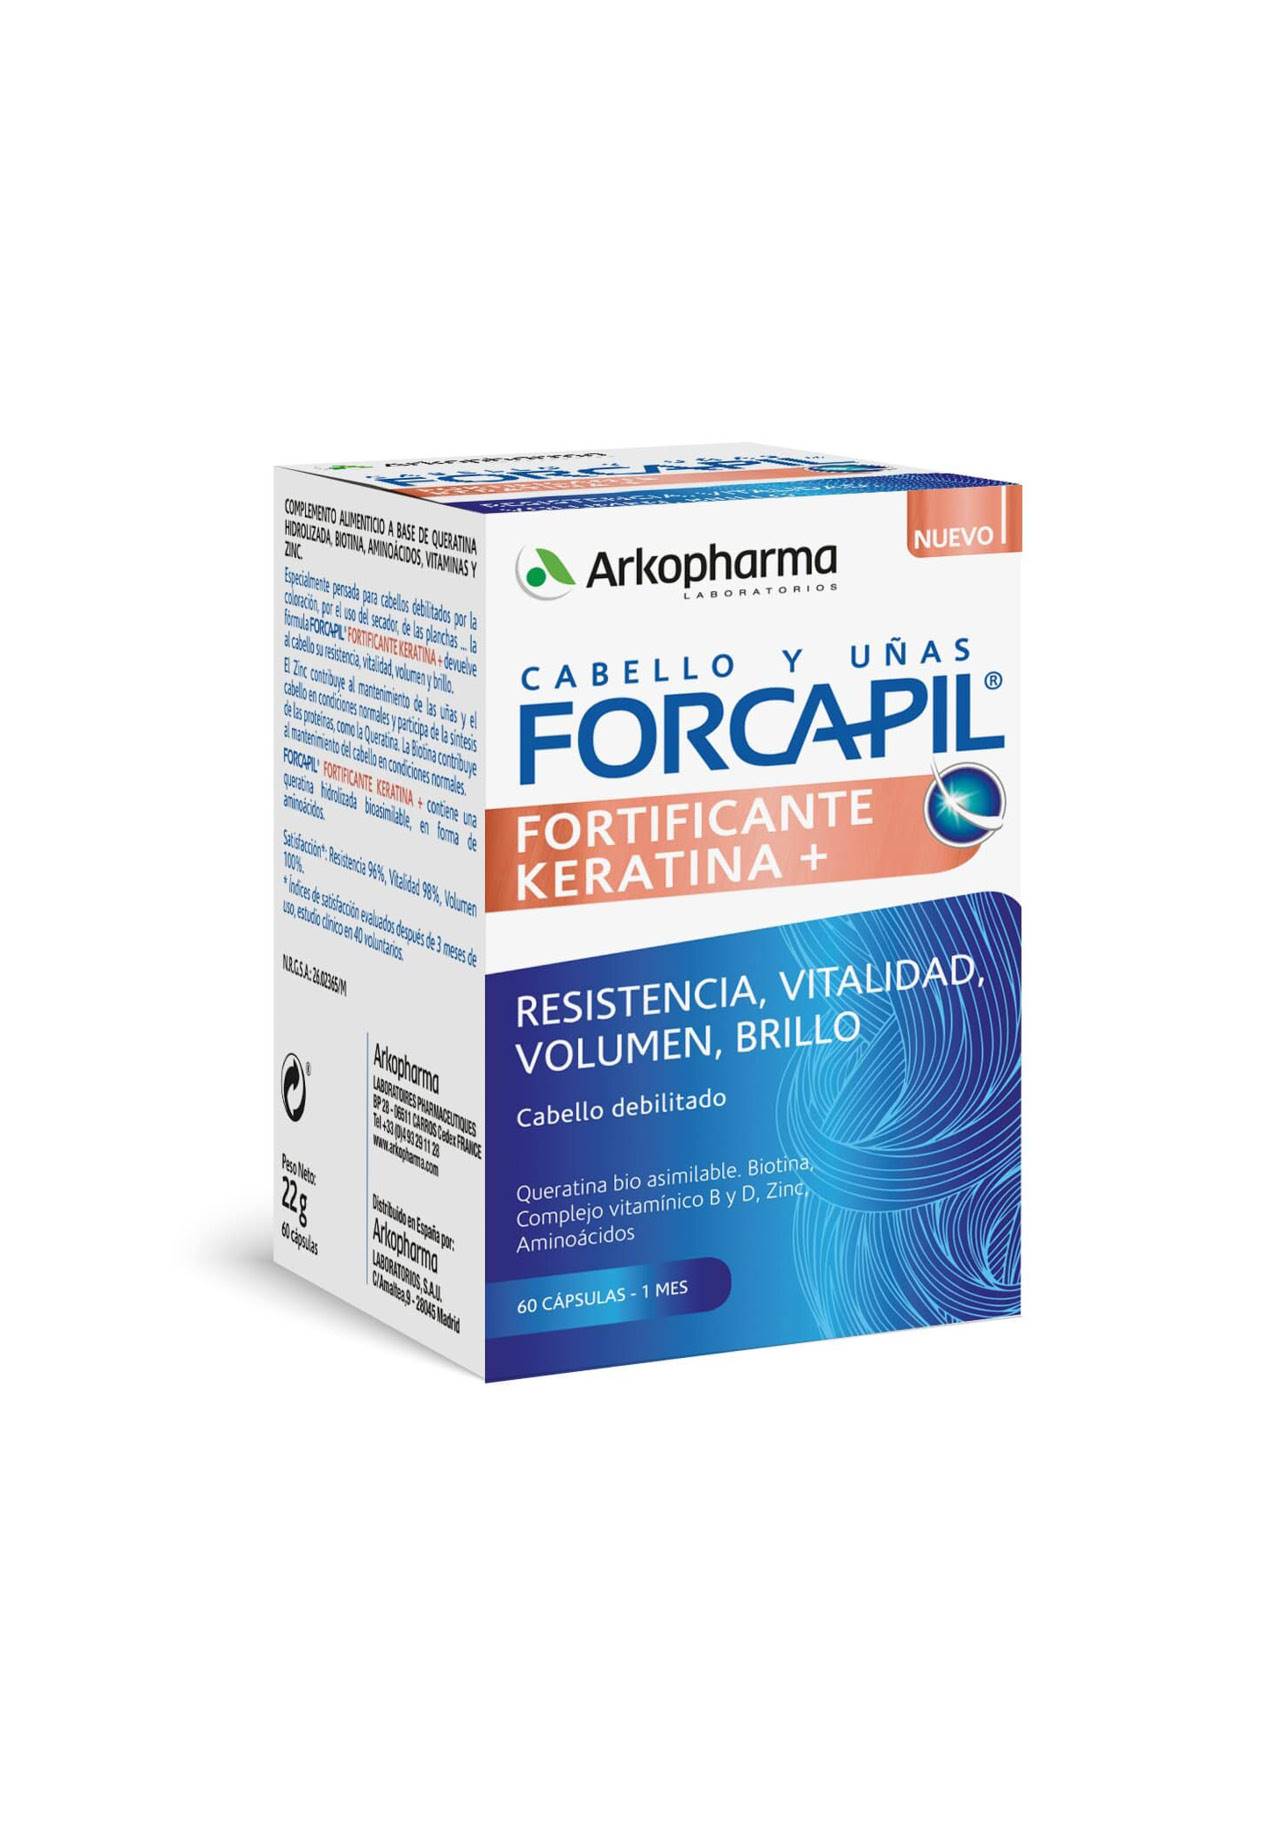 Vitaminas para el pelo: Forcapil Fortificante Keratina+ de Arkopharma